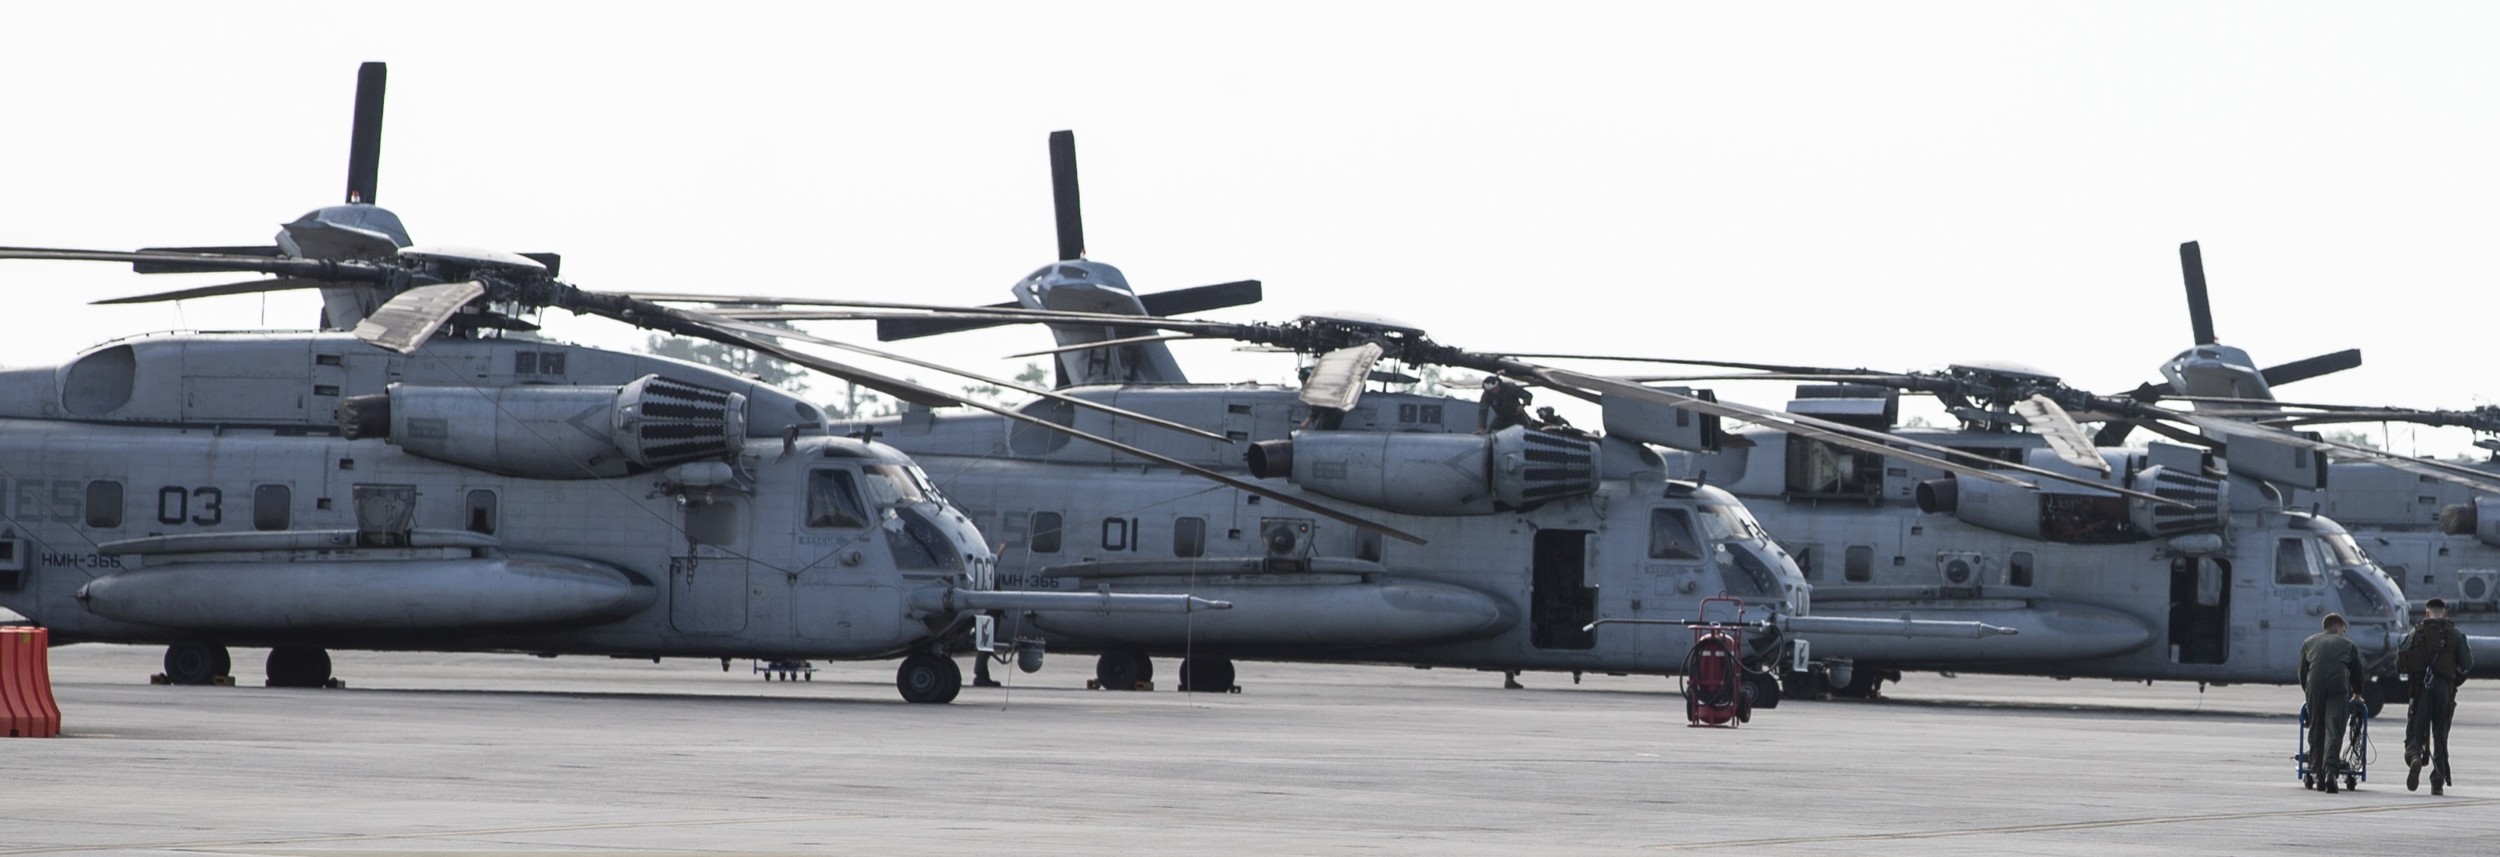 hmh-366 hammerheads marine heavy helicopter squadron usmc sikorsky ch-53e super stallion 111 mcas new river north carolina